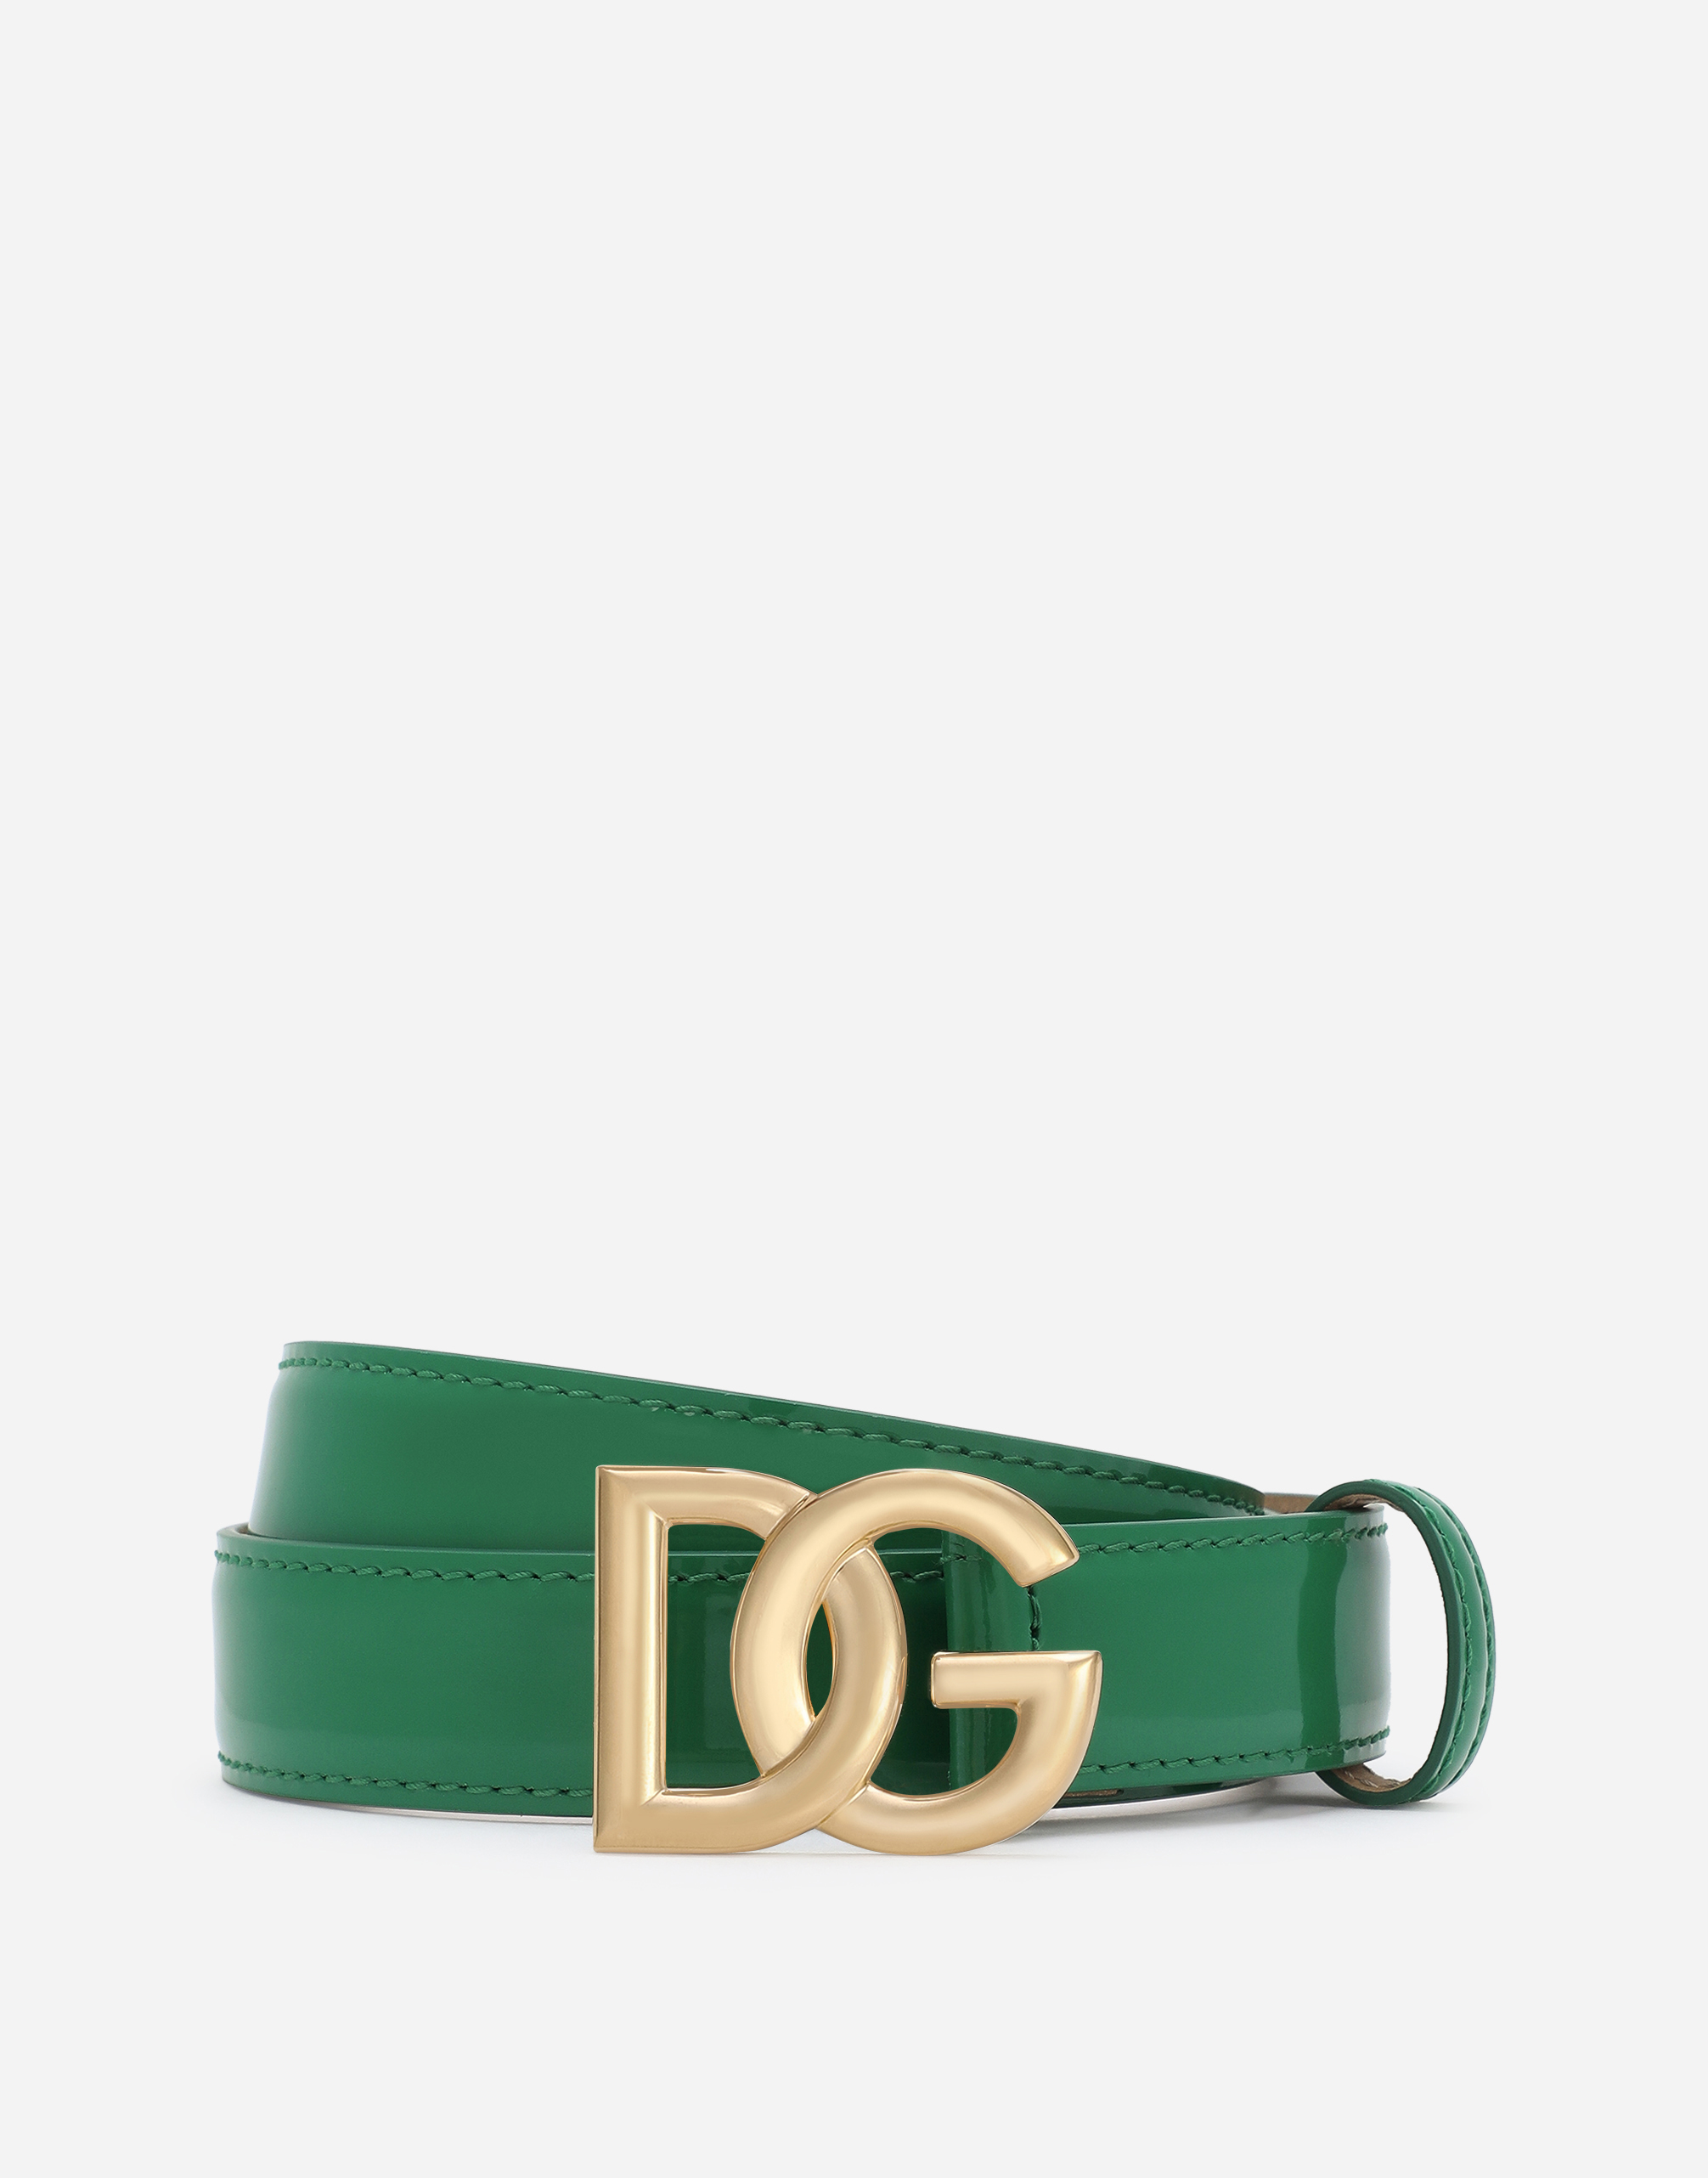 Polished calfskin belt with DG logo in Green